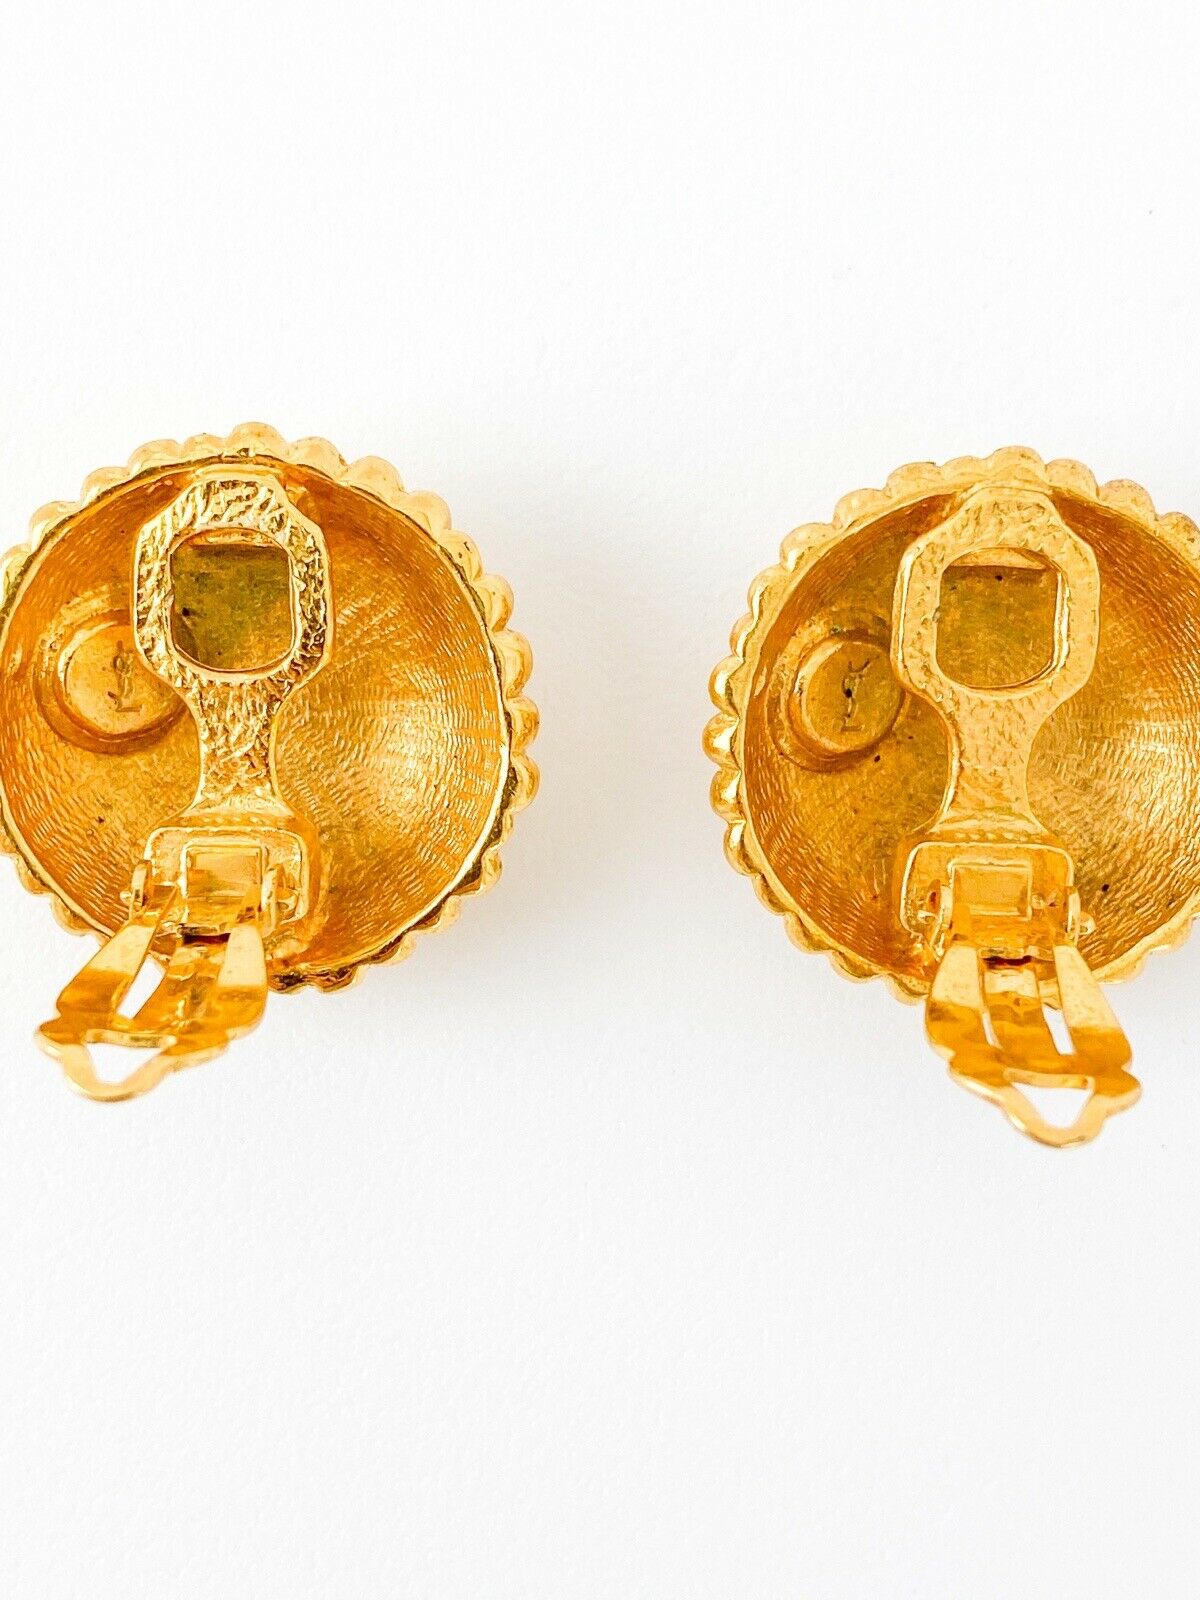 YSL Yves Saint Laurent Vintage Gold Tone Round Earrings Beautiful